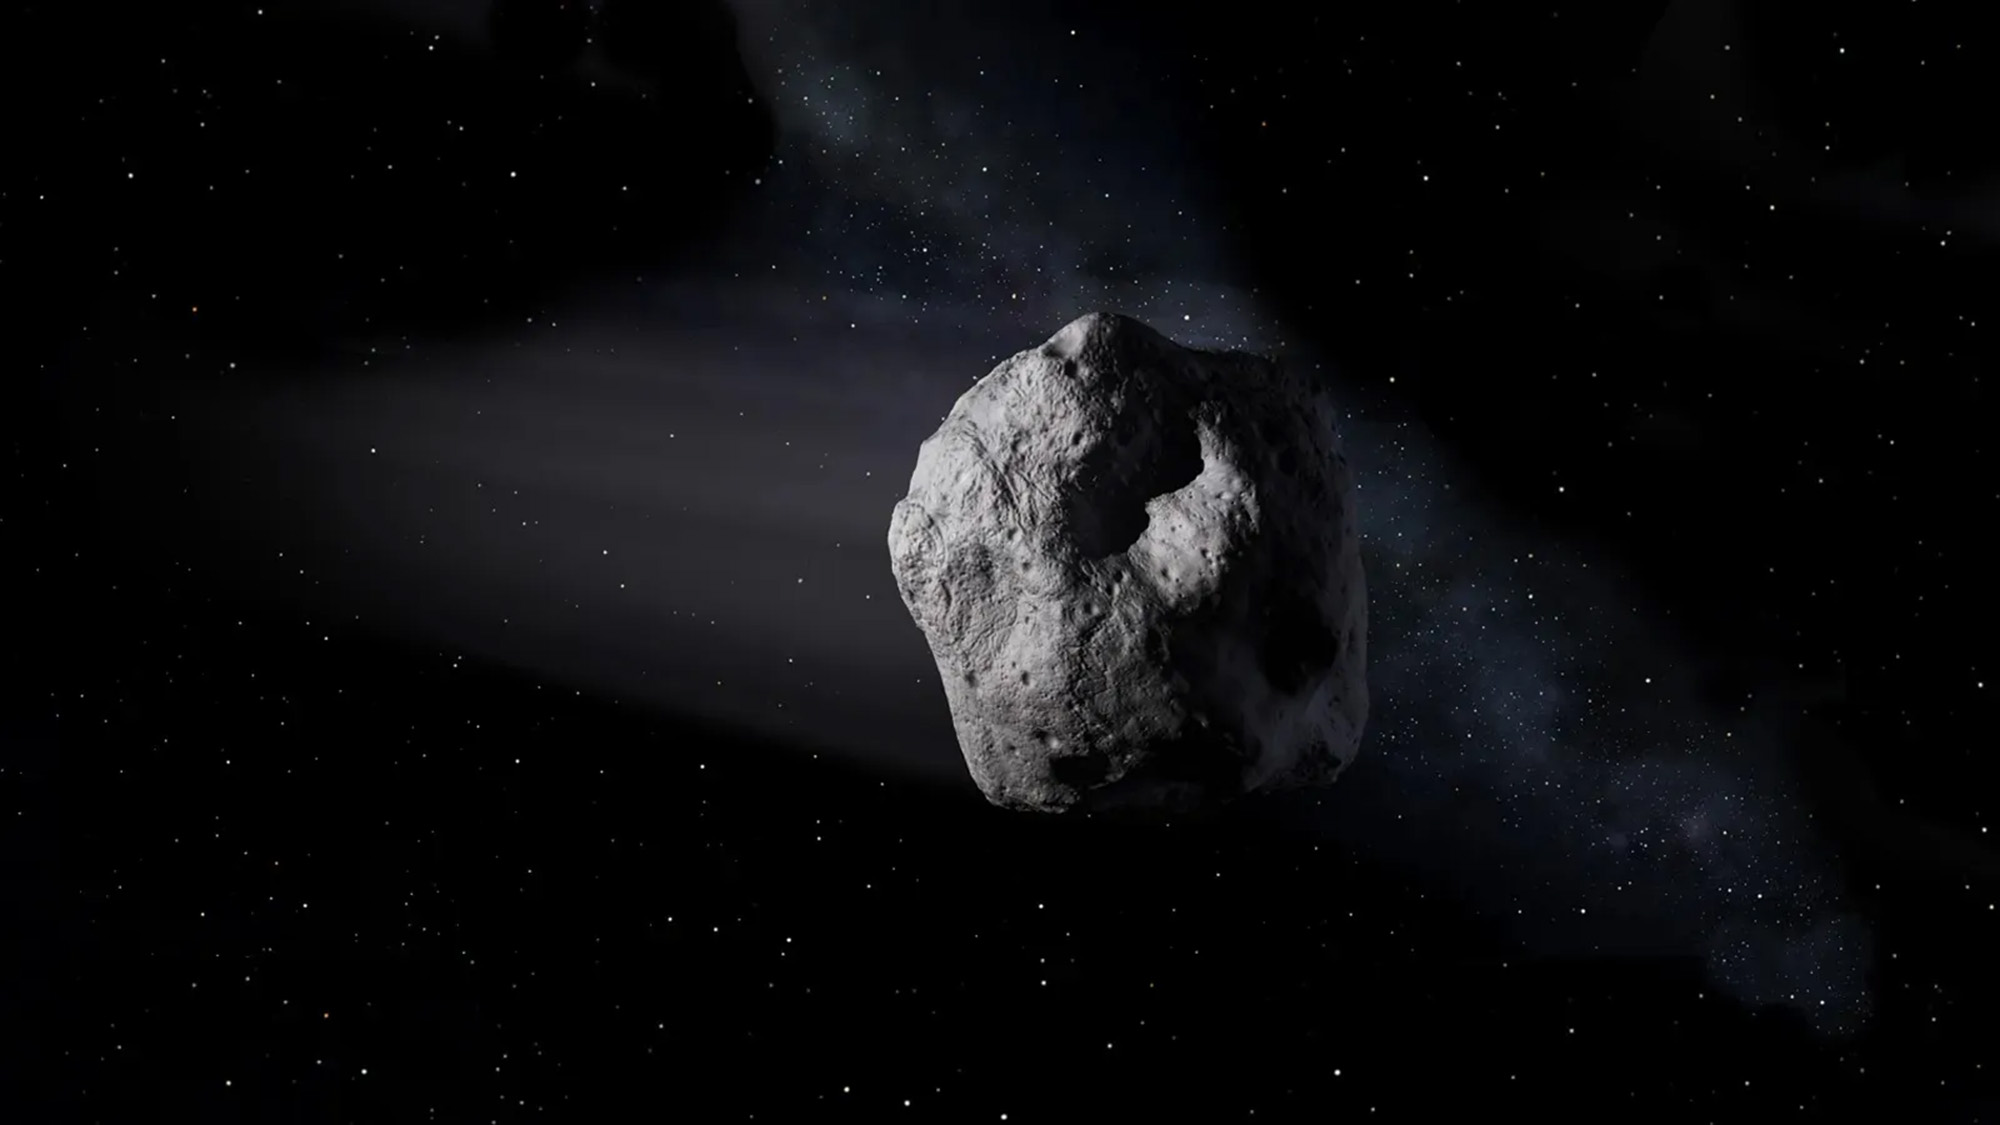 How often do asteroids come near Earth?